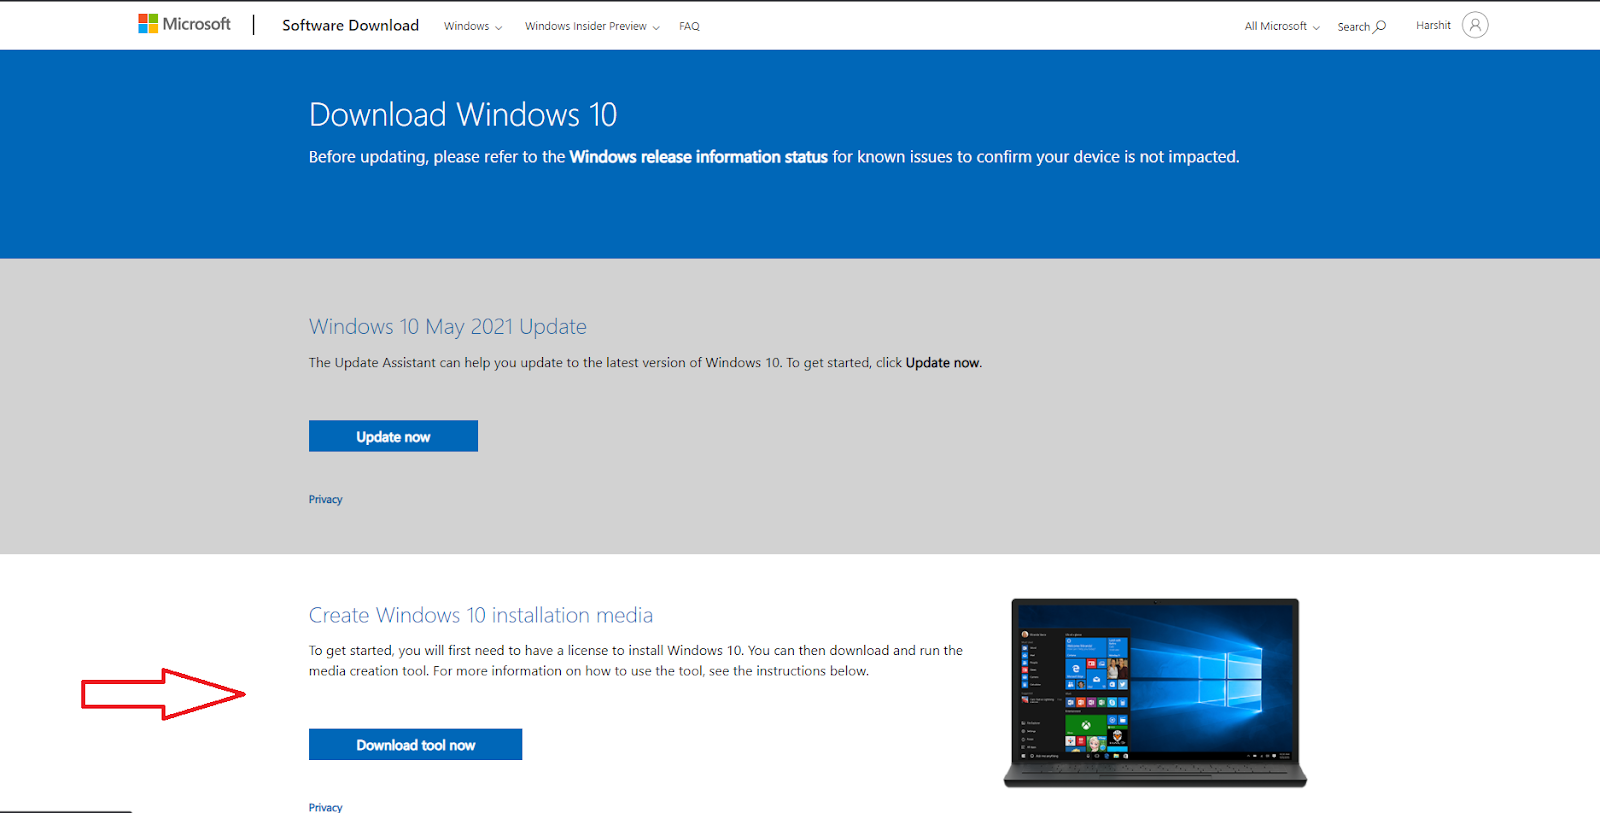 Windows 10 Home - Licenza Microsoft – Multimedia Soft ESD